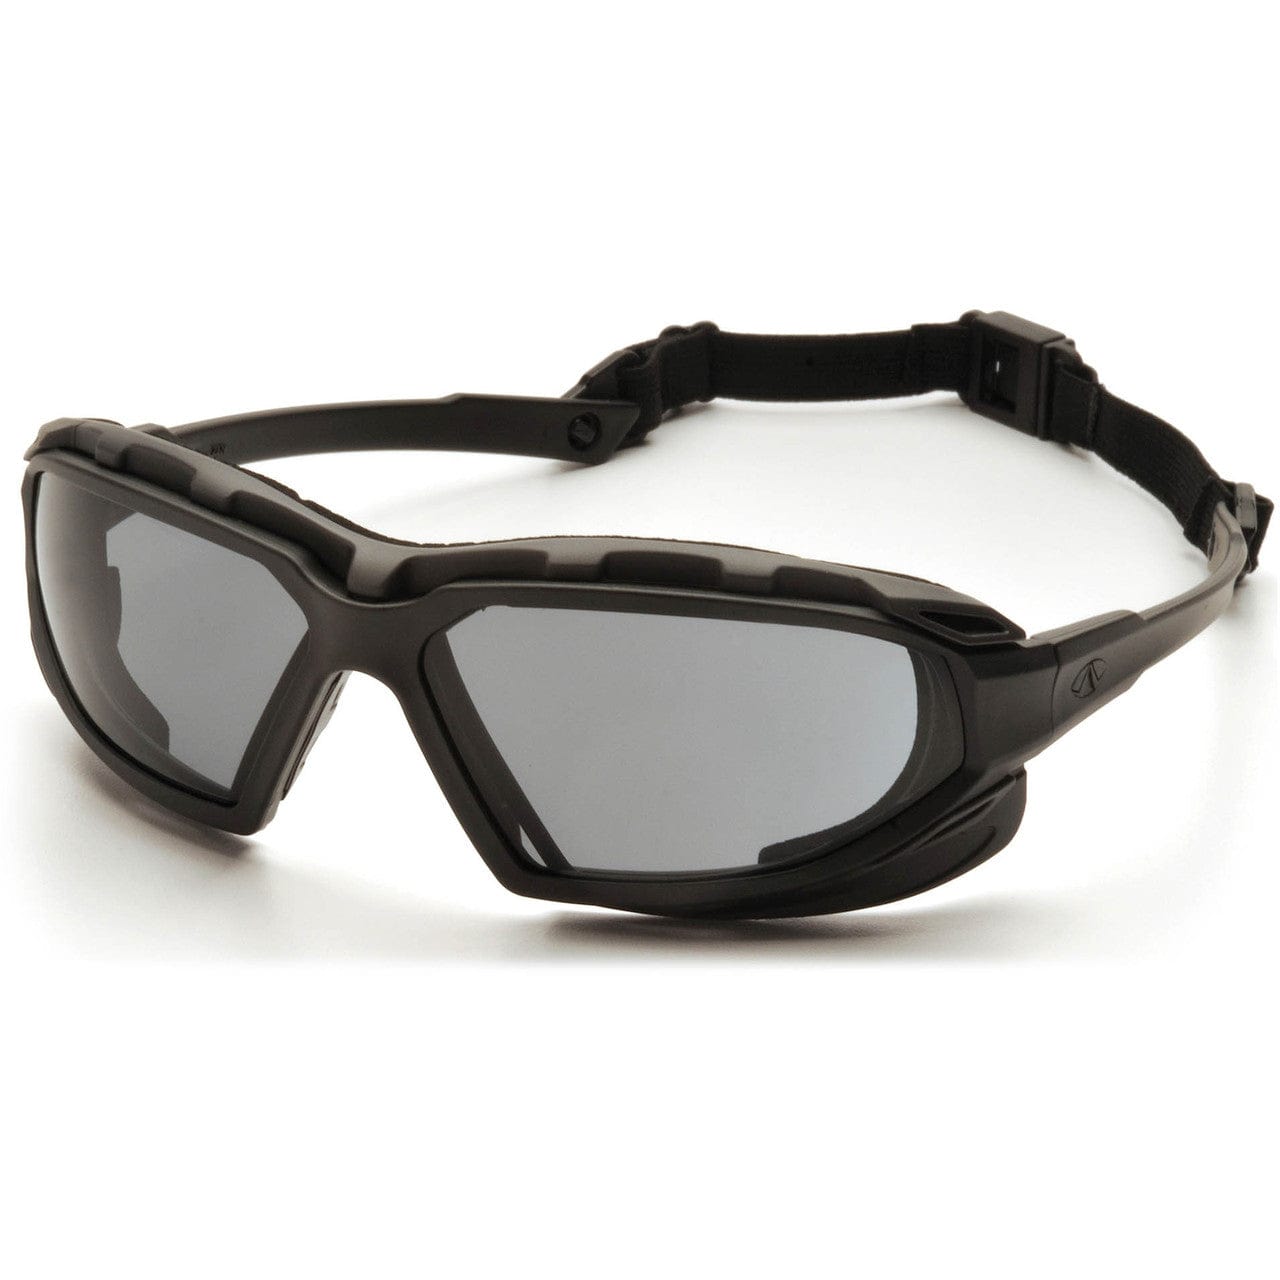 Pyramex Highlander Plus Safety Glasses Black Foam-Lined Frame Gray Anti-Fog Lens SBG5020DT